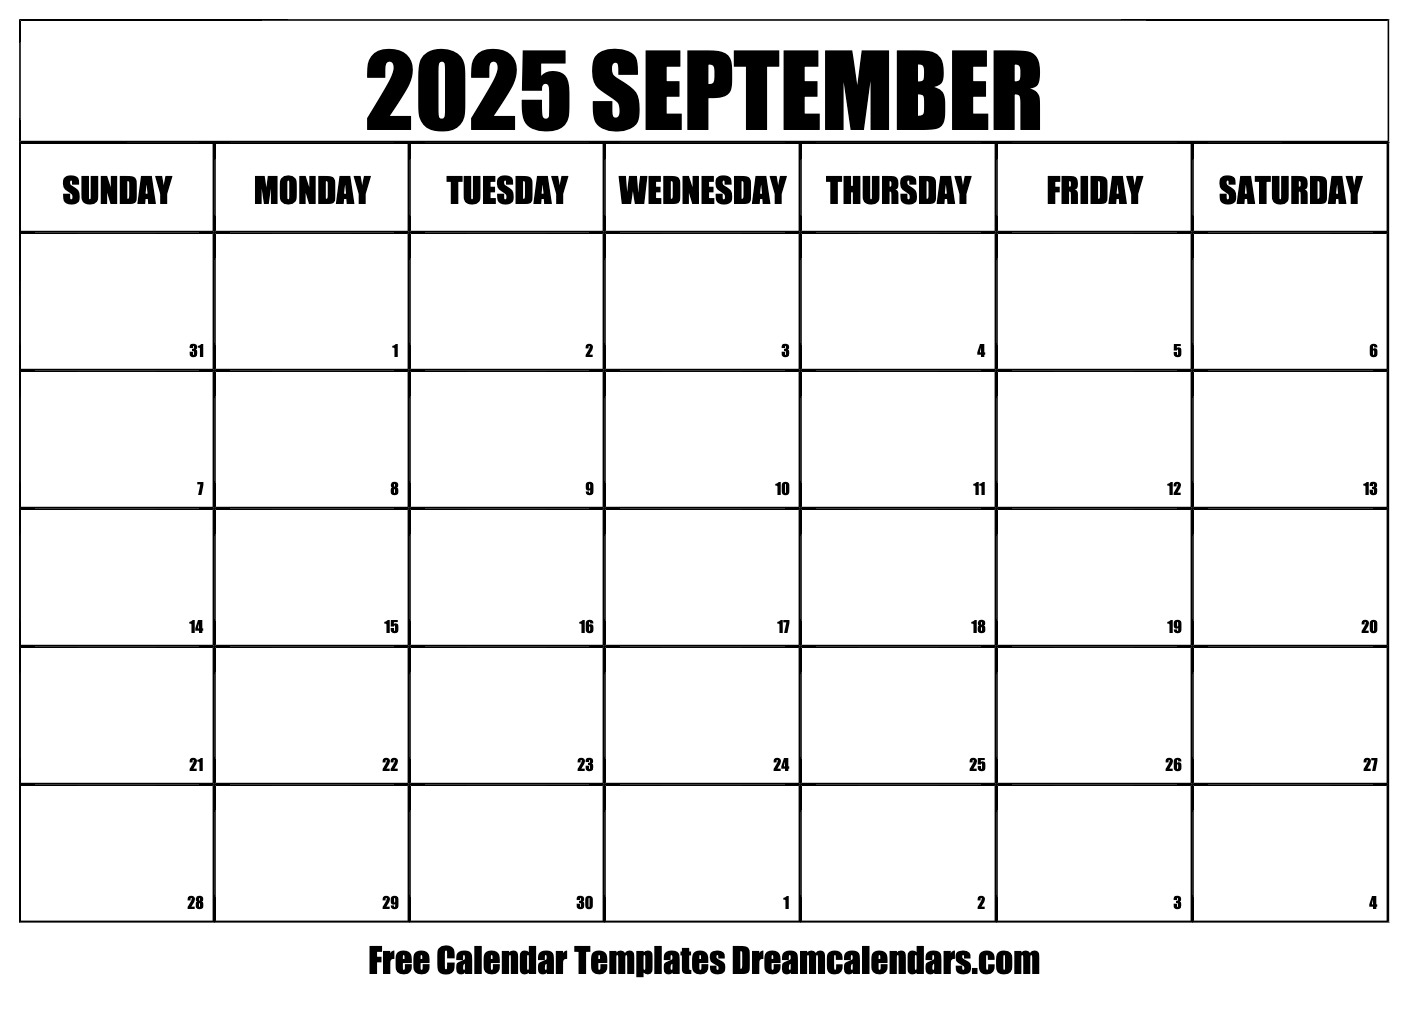 september-2025-with-holidays-calendar